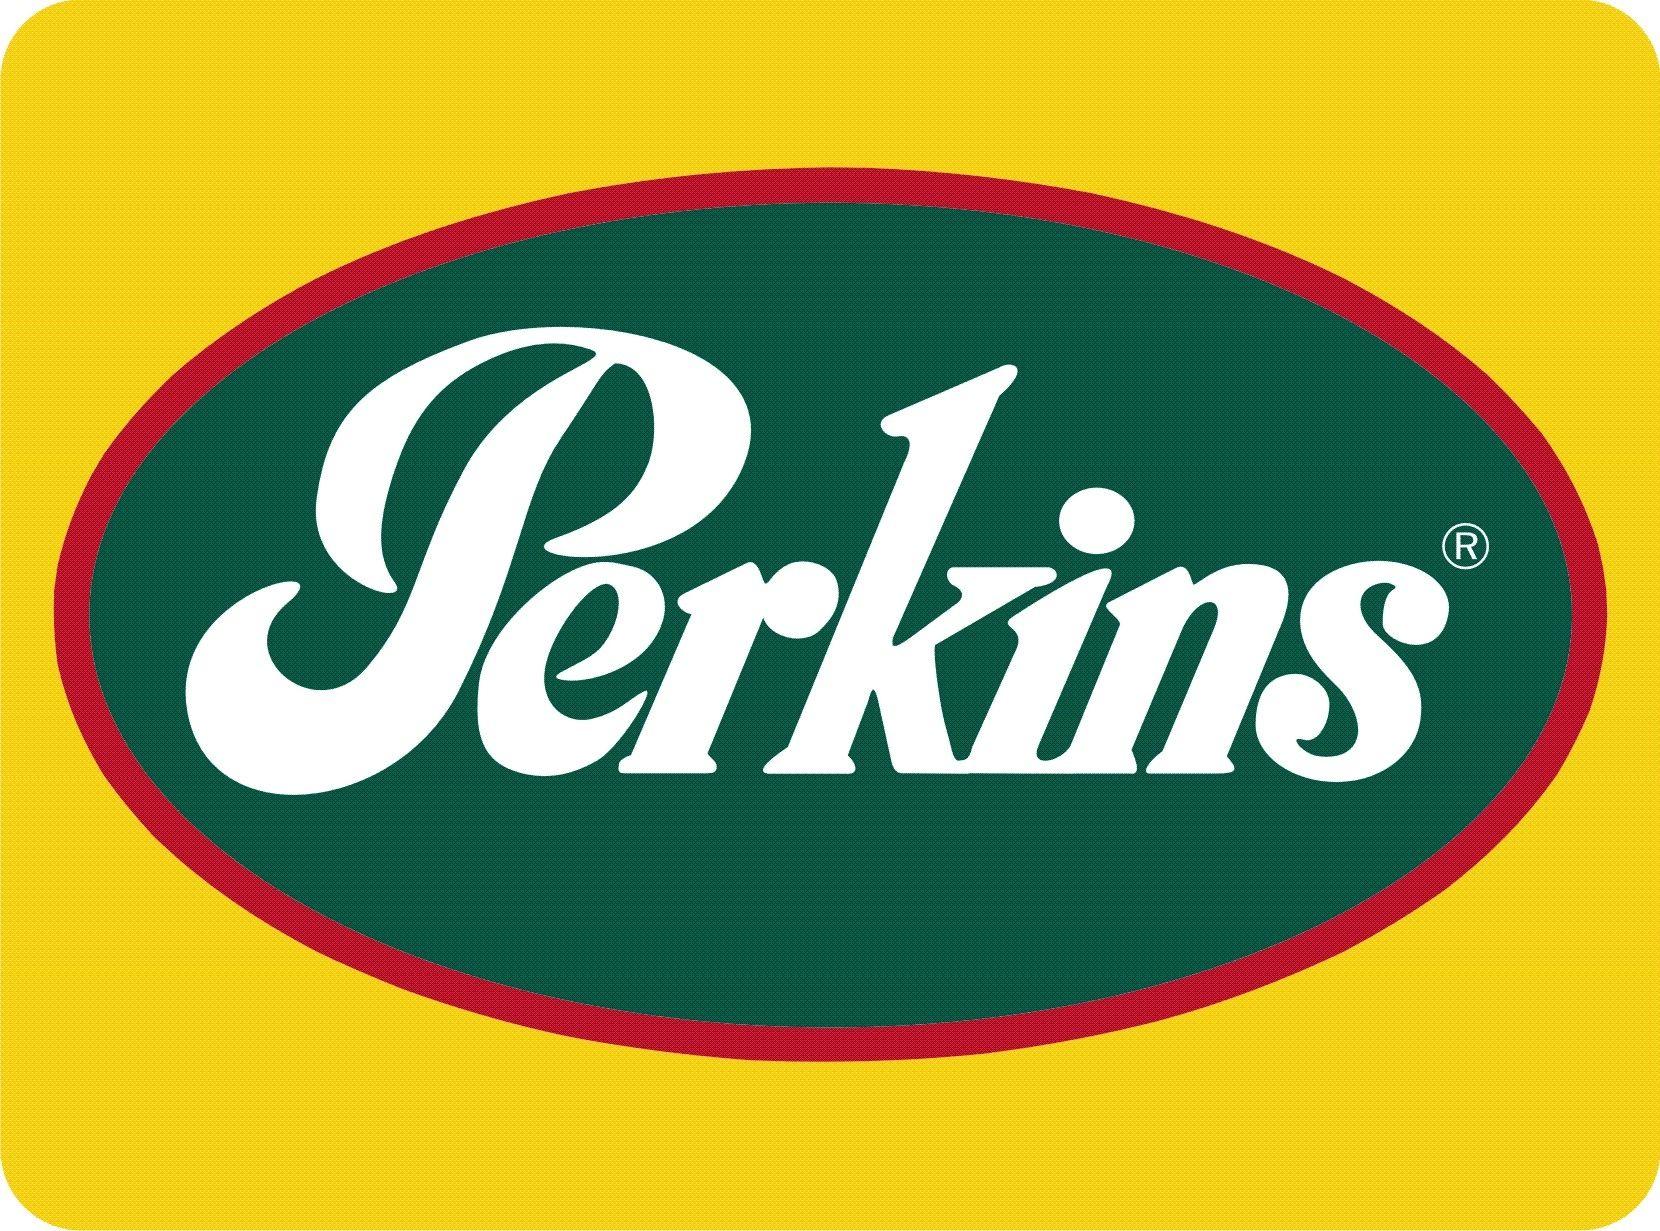 Perkins Restaurant Logo - Ohio Logos - Testimonials